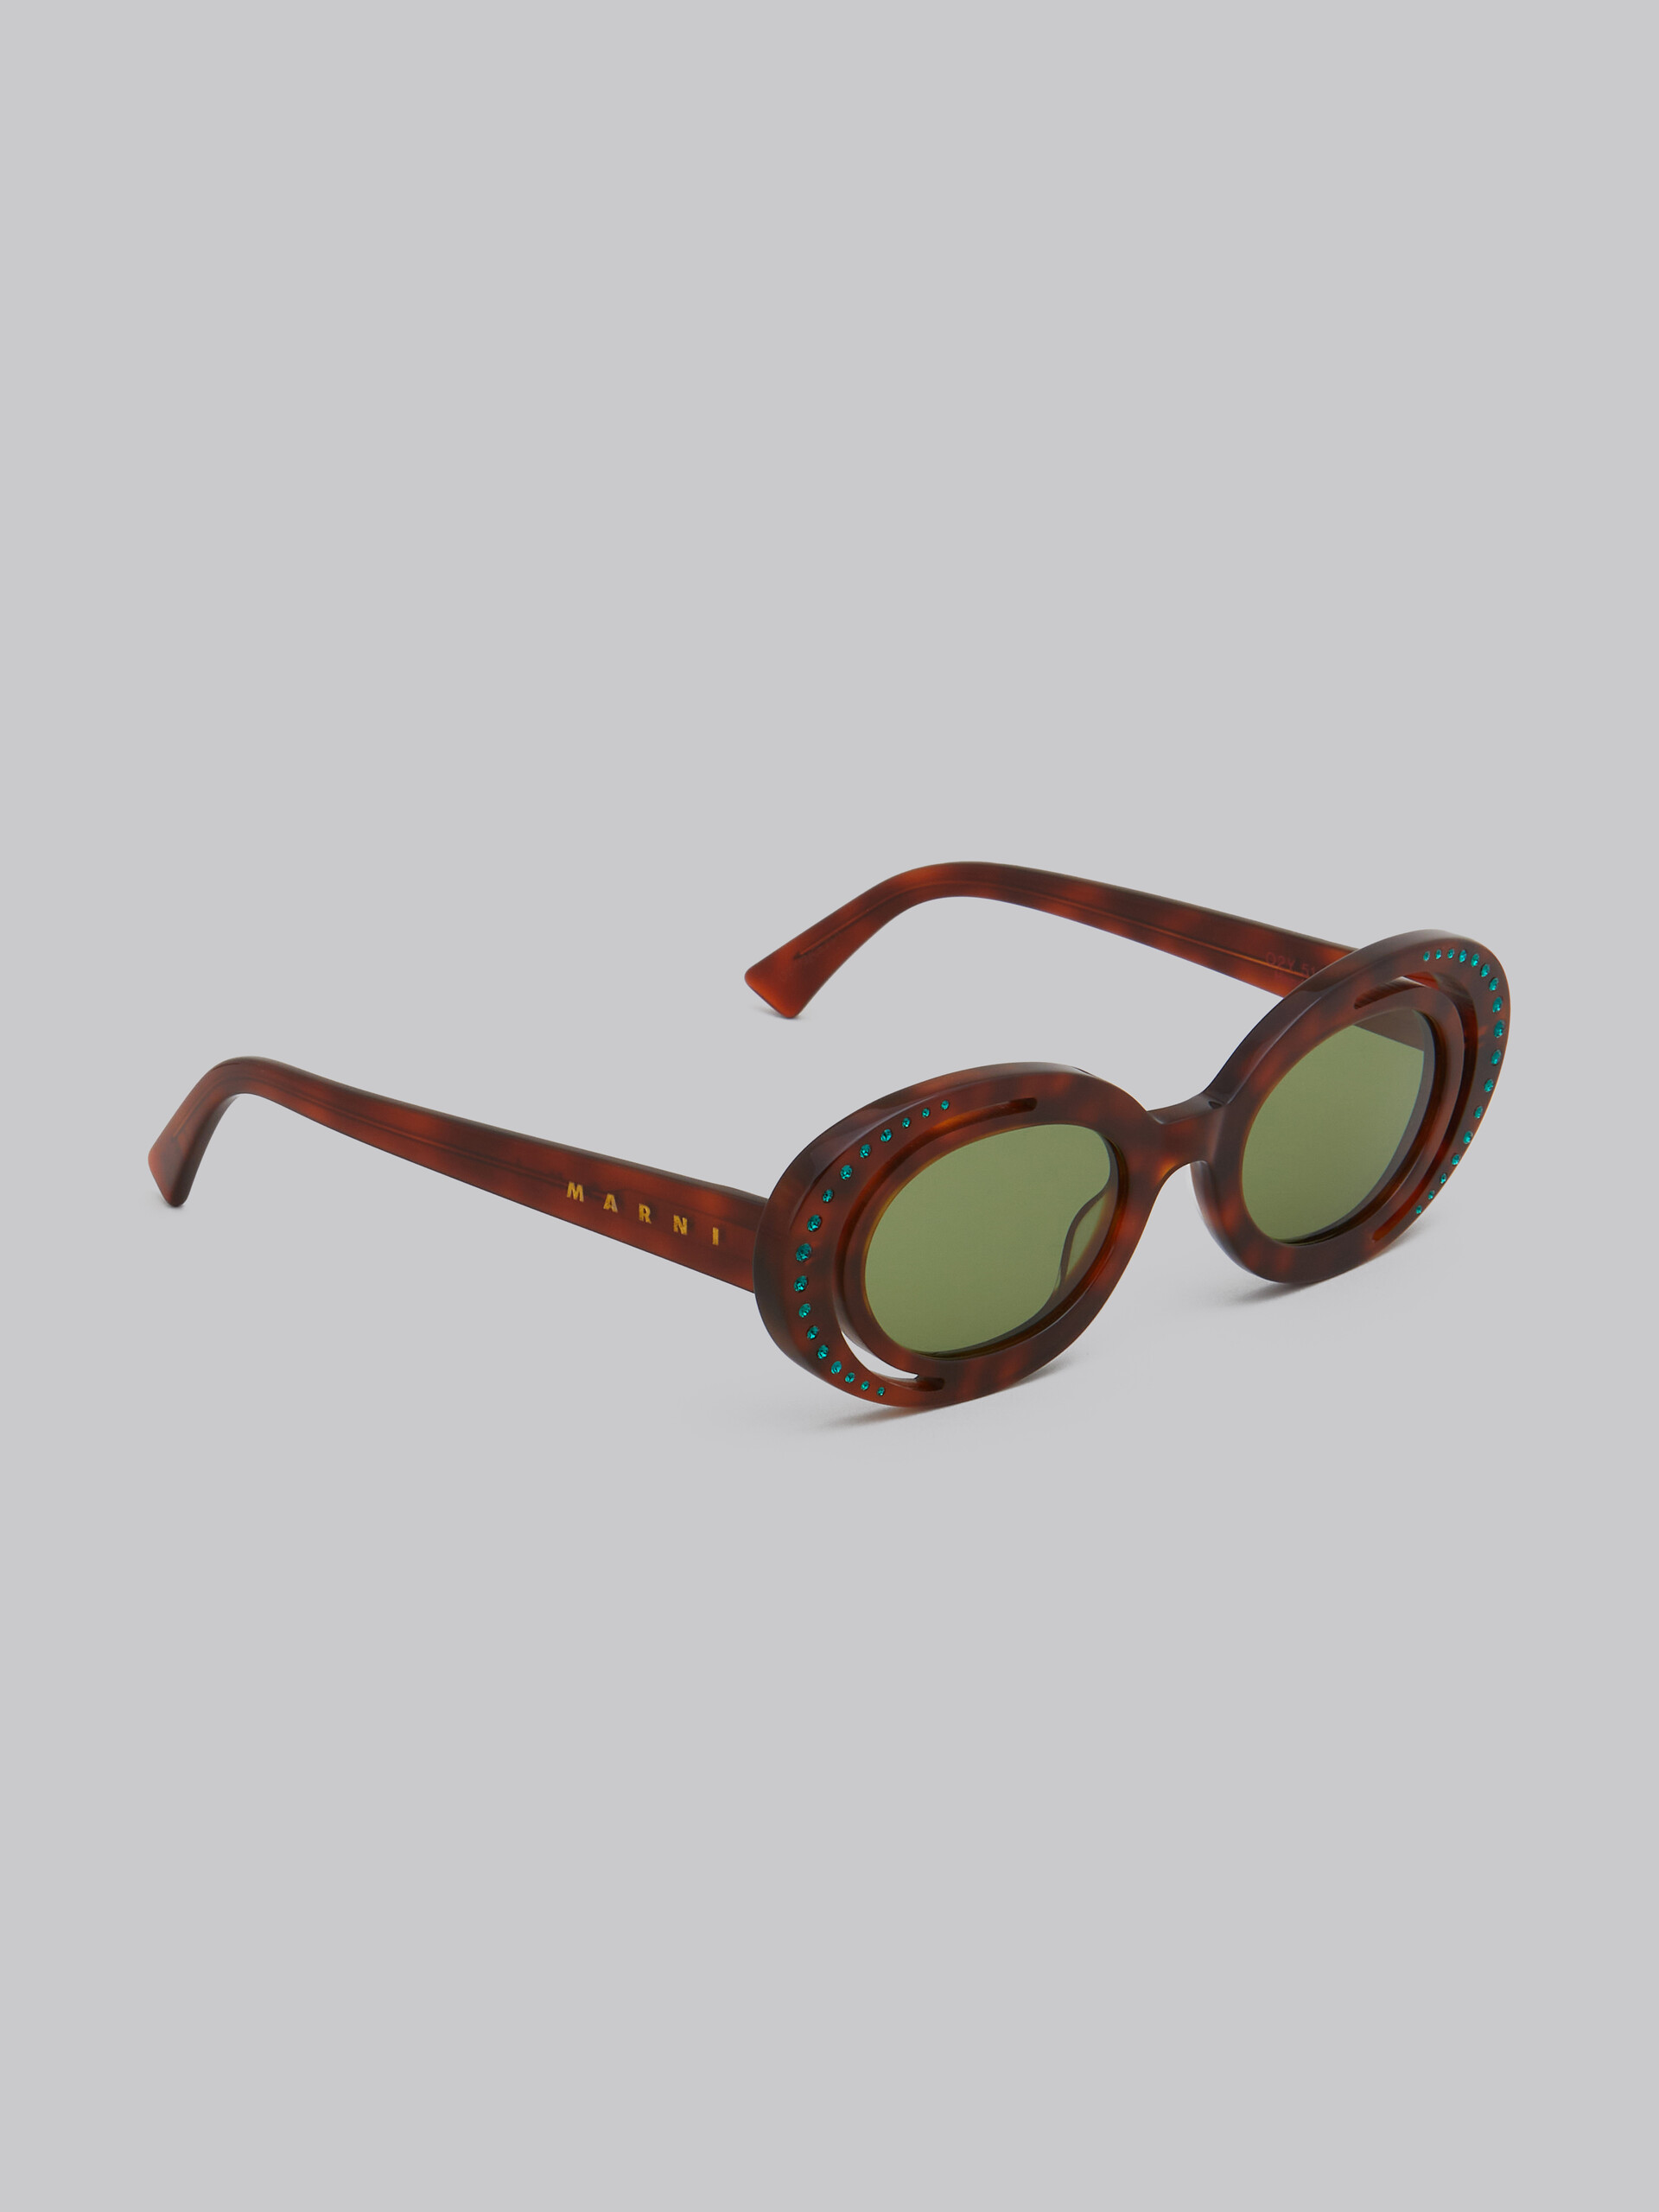 Zion Canyon black sunglasses - Optical - Image 3